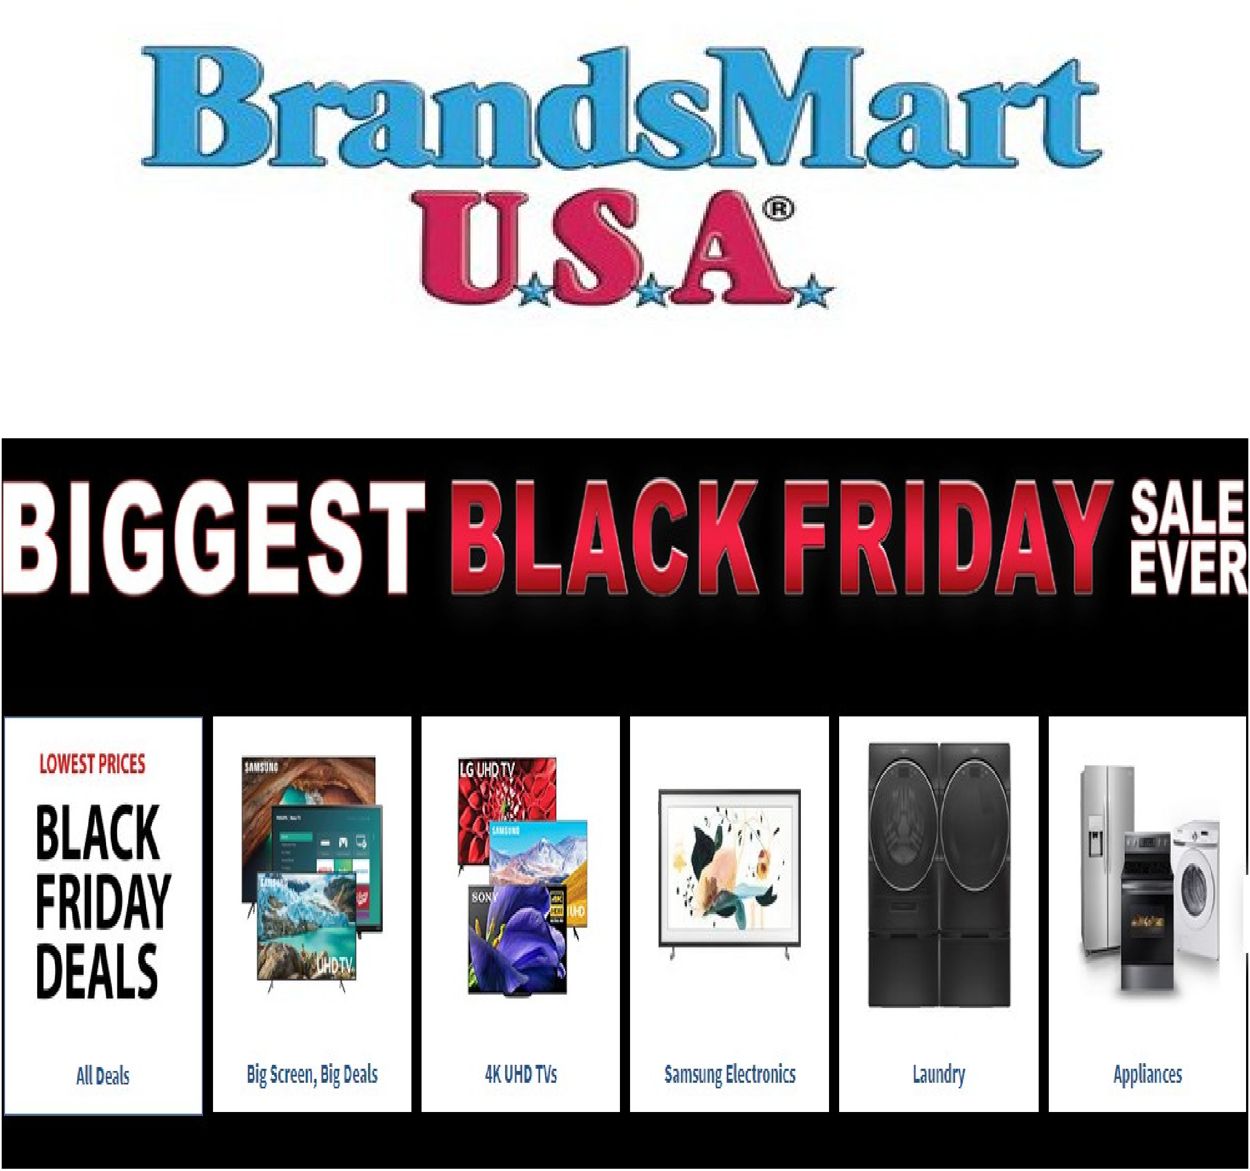 Brandsmart USA Ad from 11/26/2020